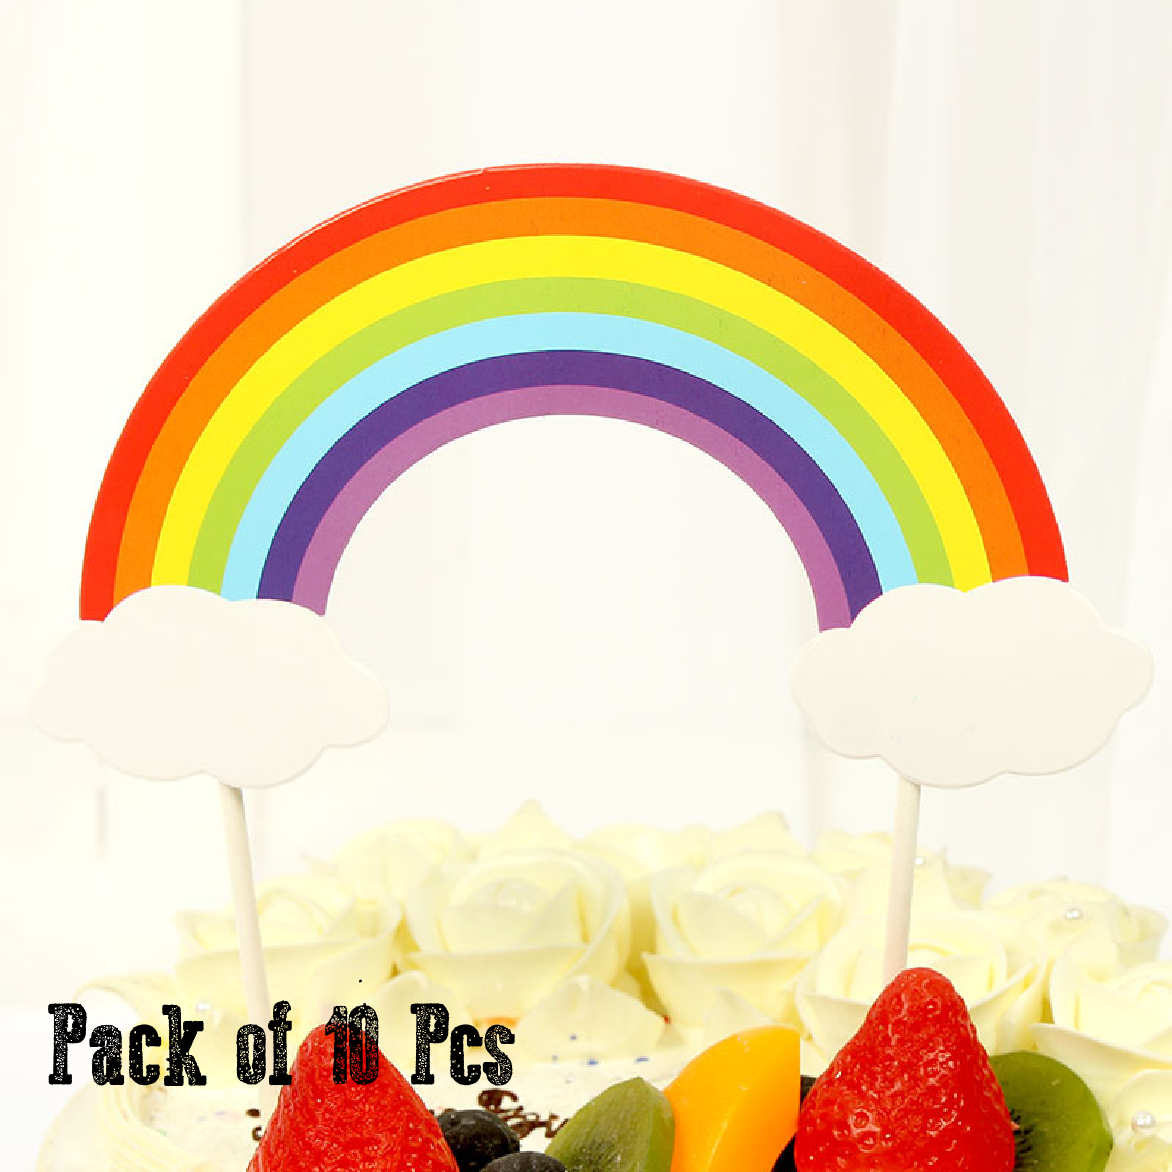 Cake Topper Decorations  - Rainbow/ cloud - Rampant Coffee Company